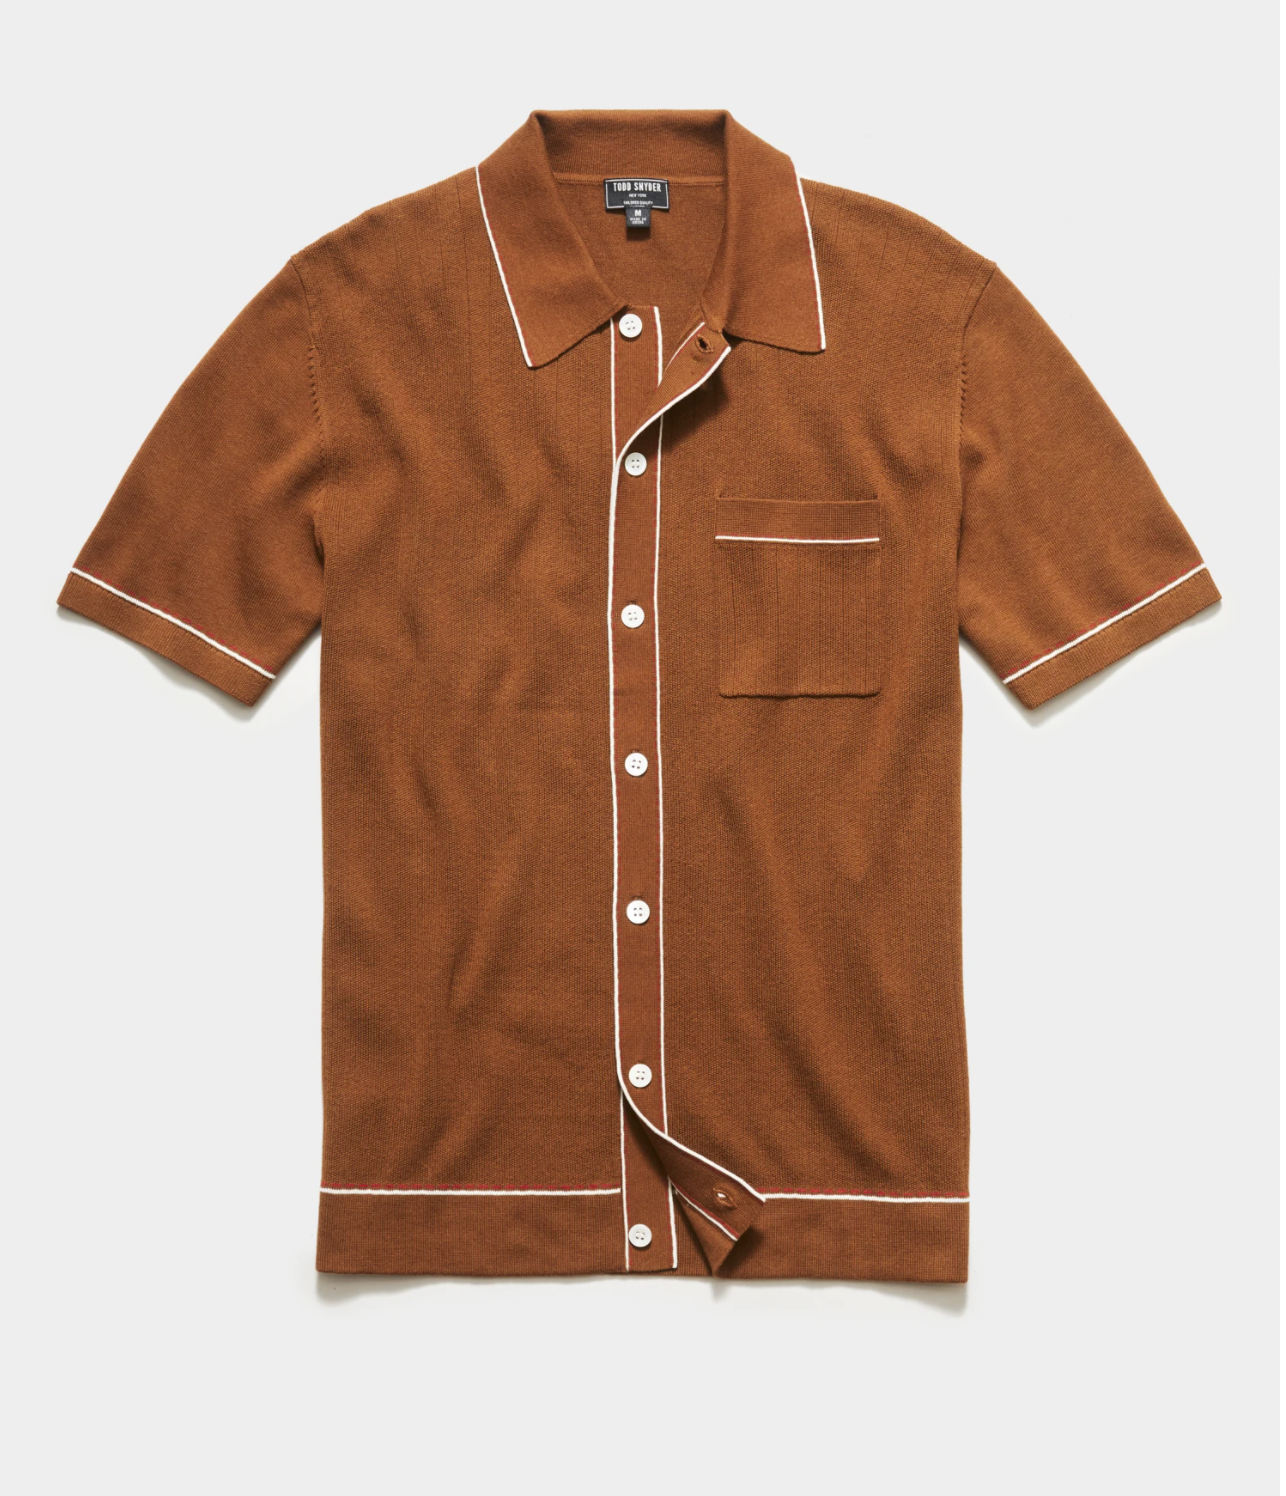 Todd Snyder Italian Cotton Silk Shirt ($229)